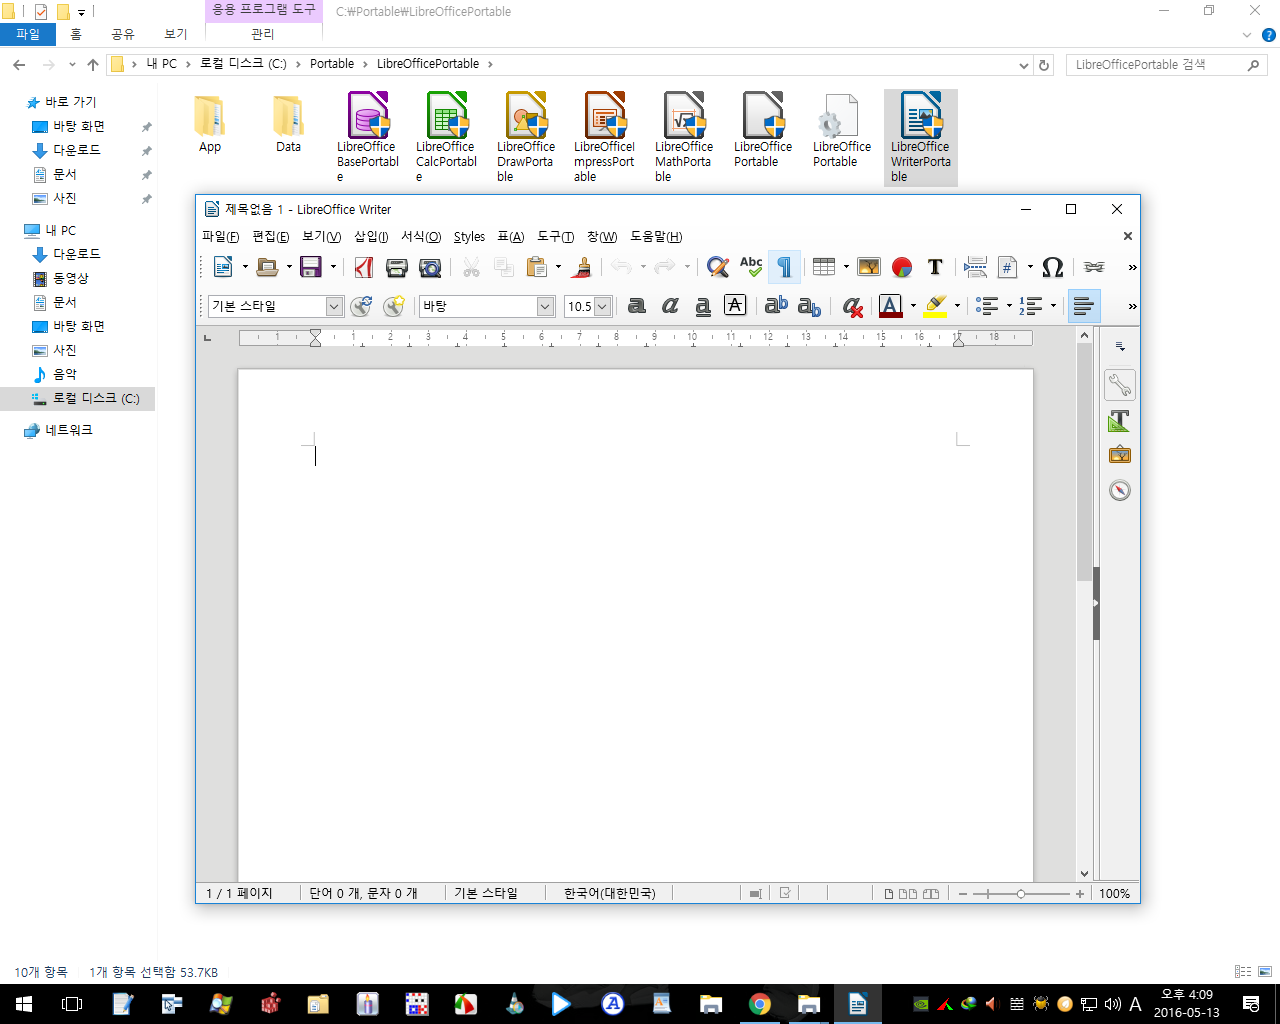 LibreOfficeWriterPortable.png